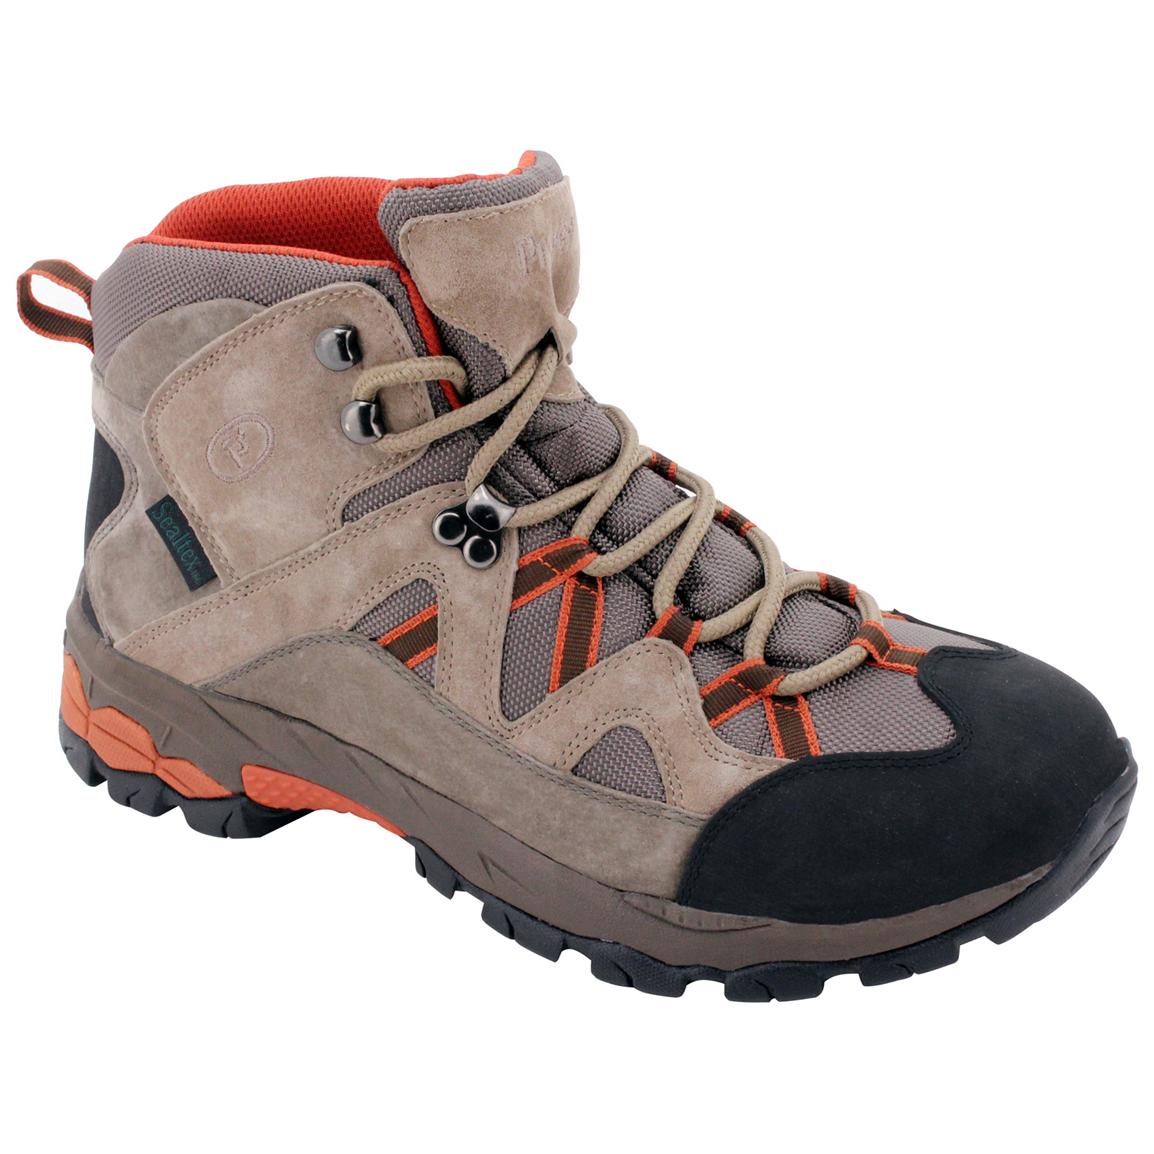 Eiger Waterproof Mid Hiking Boots 